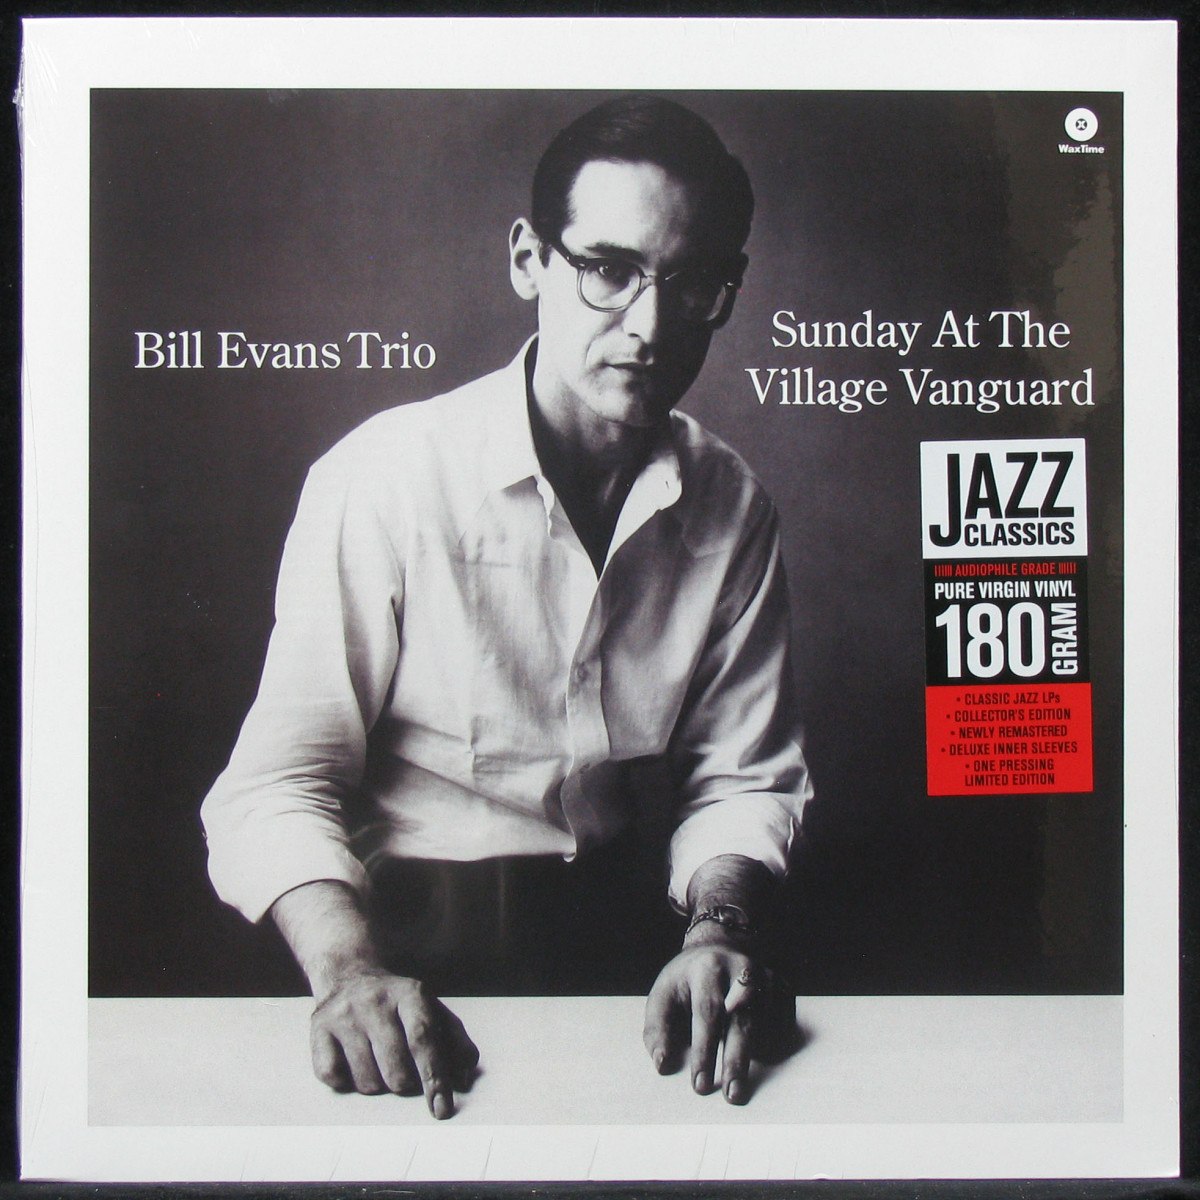 Купить виниловую пластинку Bill Evans Trio - Sunday At The Village Vanguard